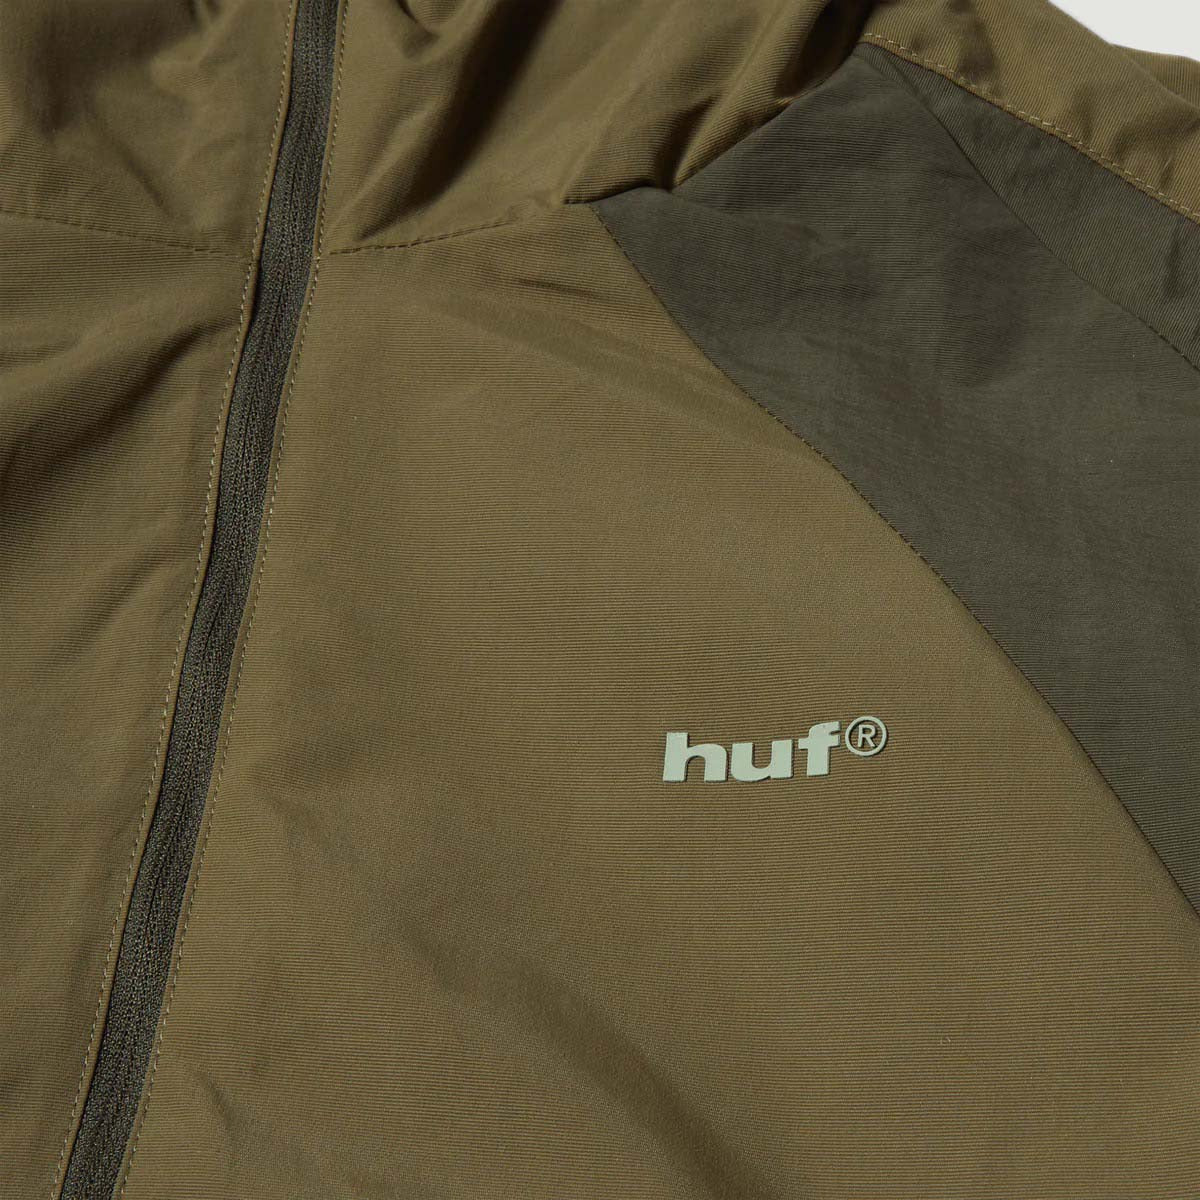 Huf Set Shell Jacket